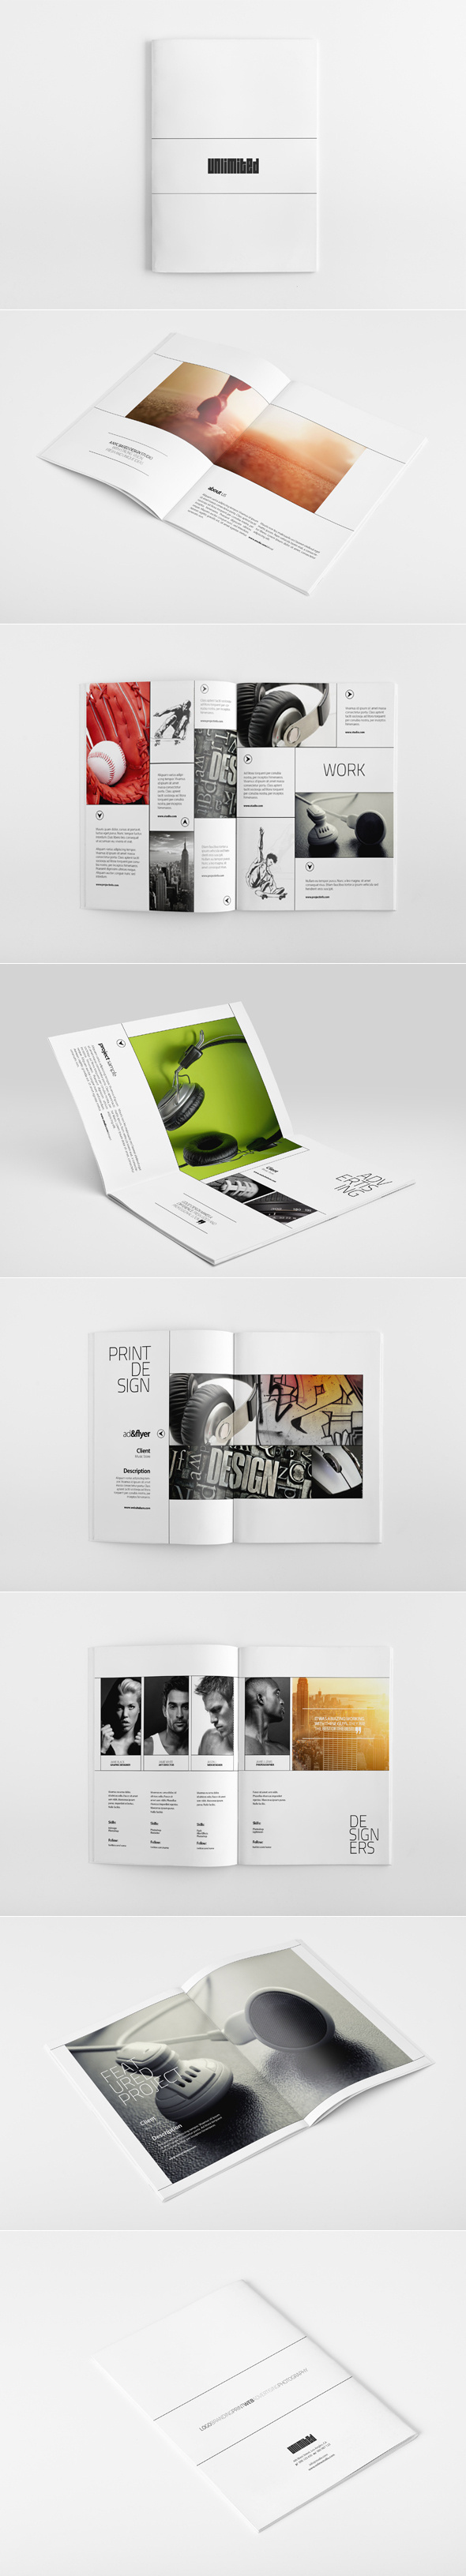 Brochure design idea #34: Unlimited Portfolio #brochure